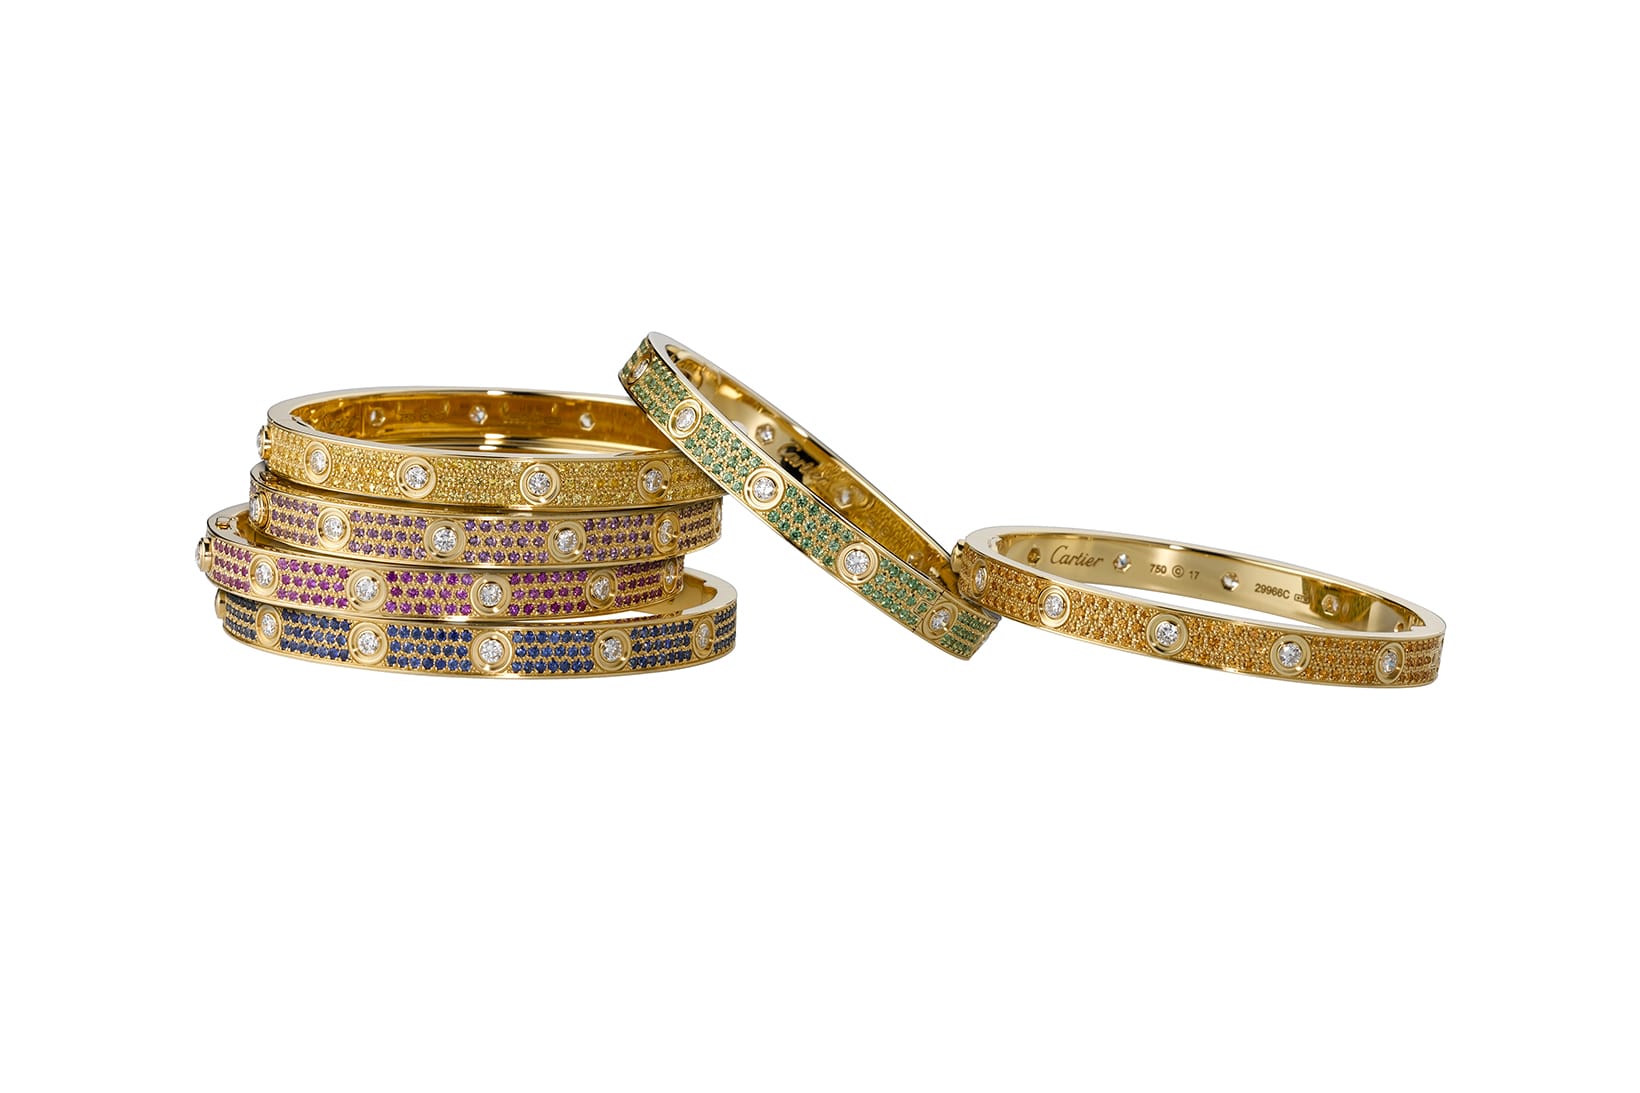 designer of cartier love bracelet